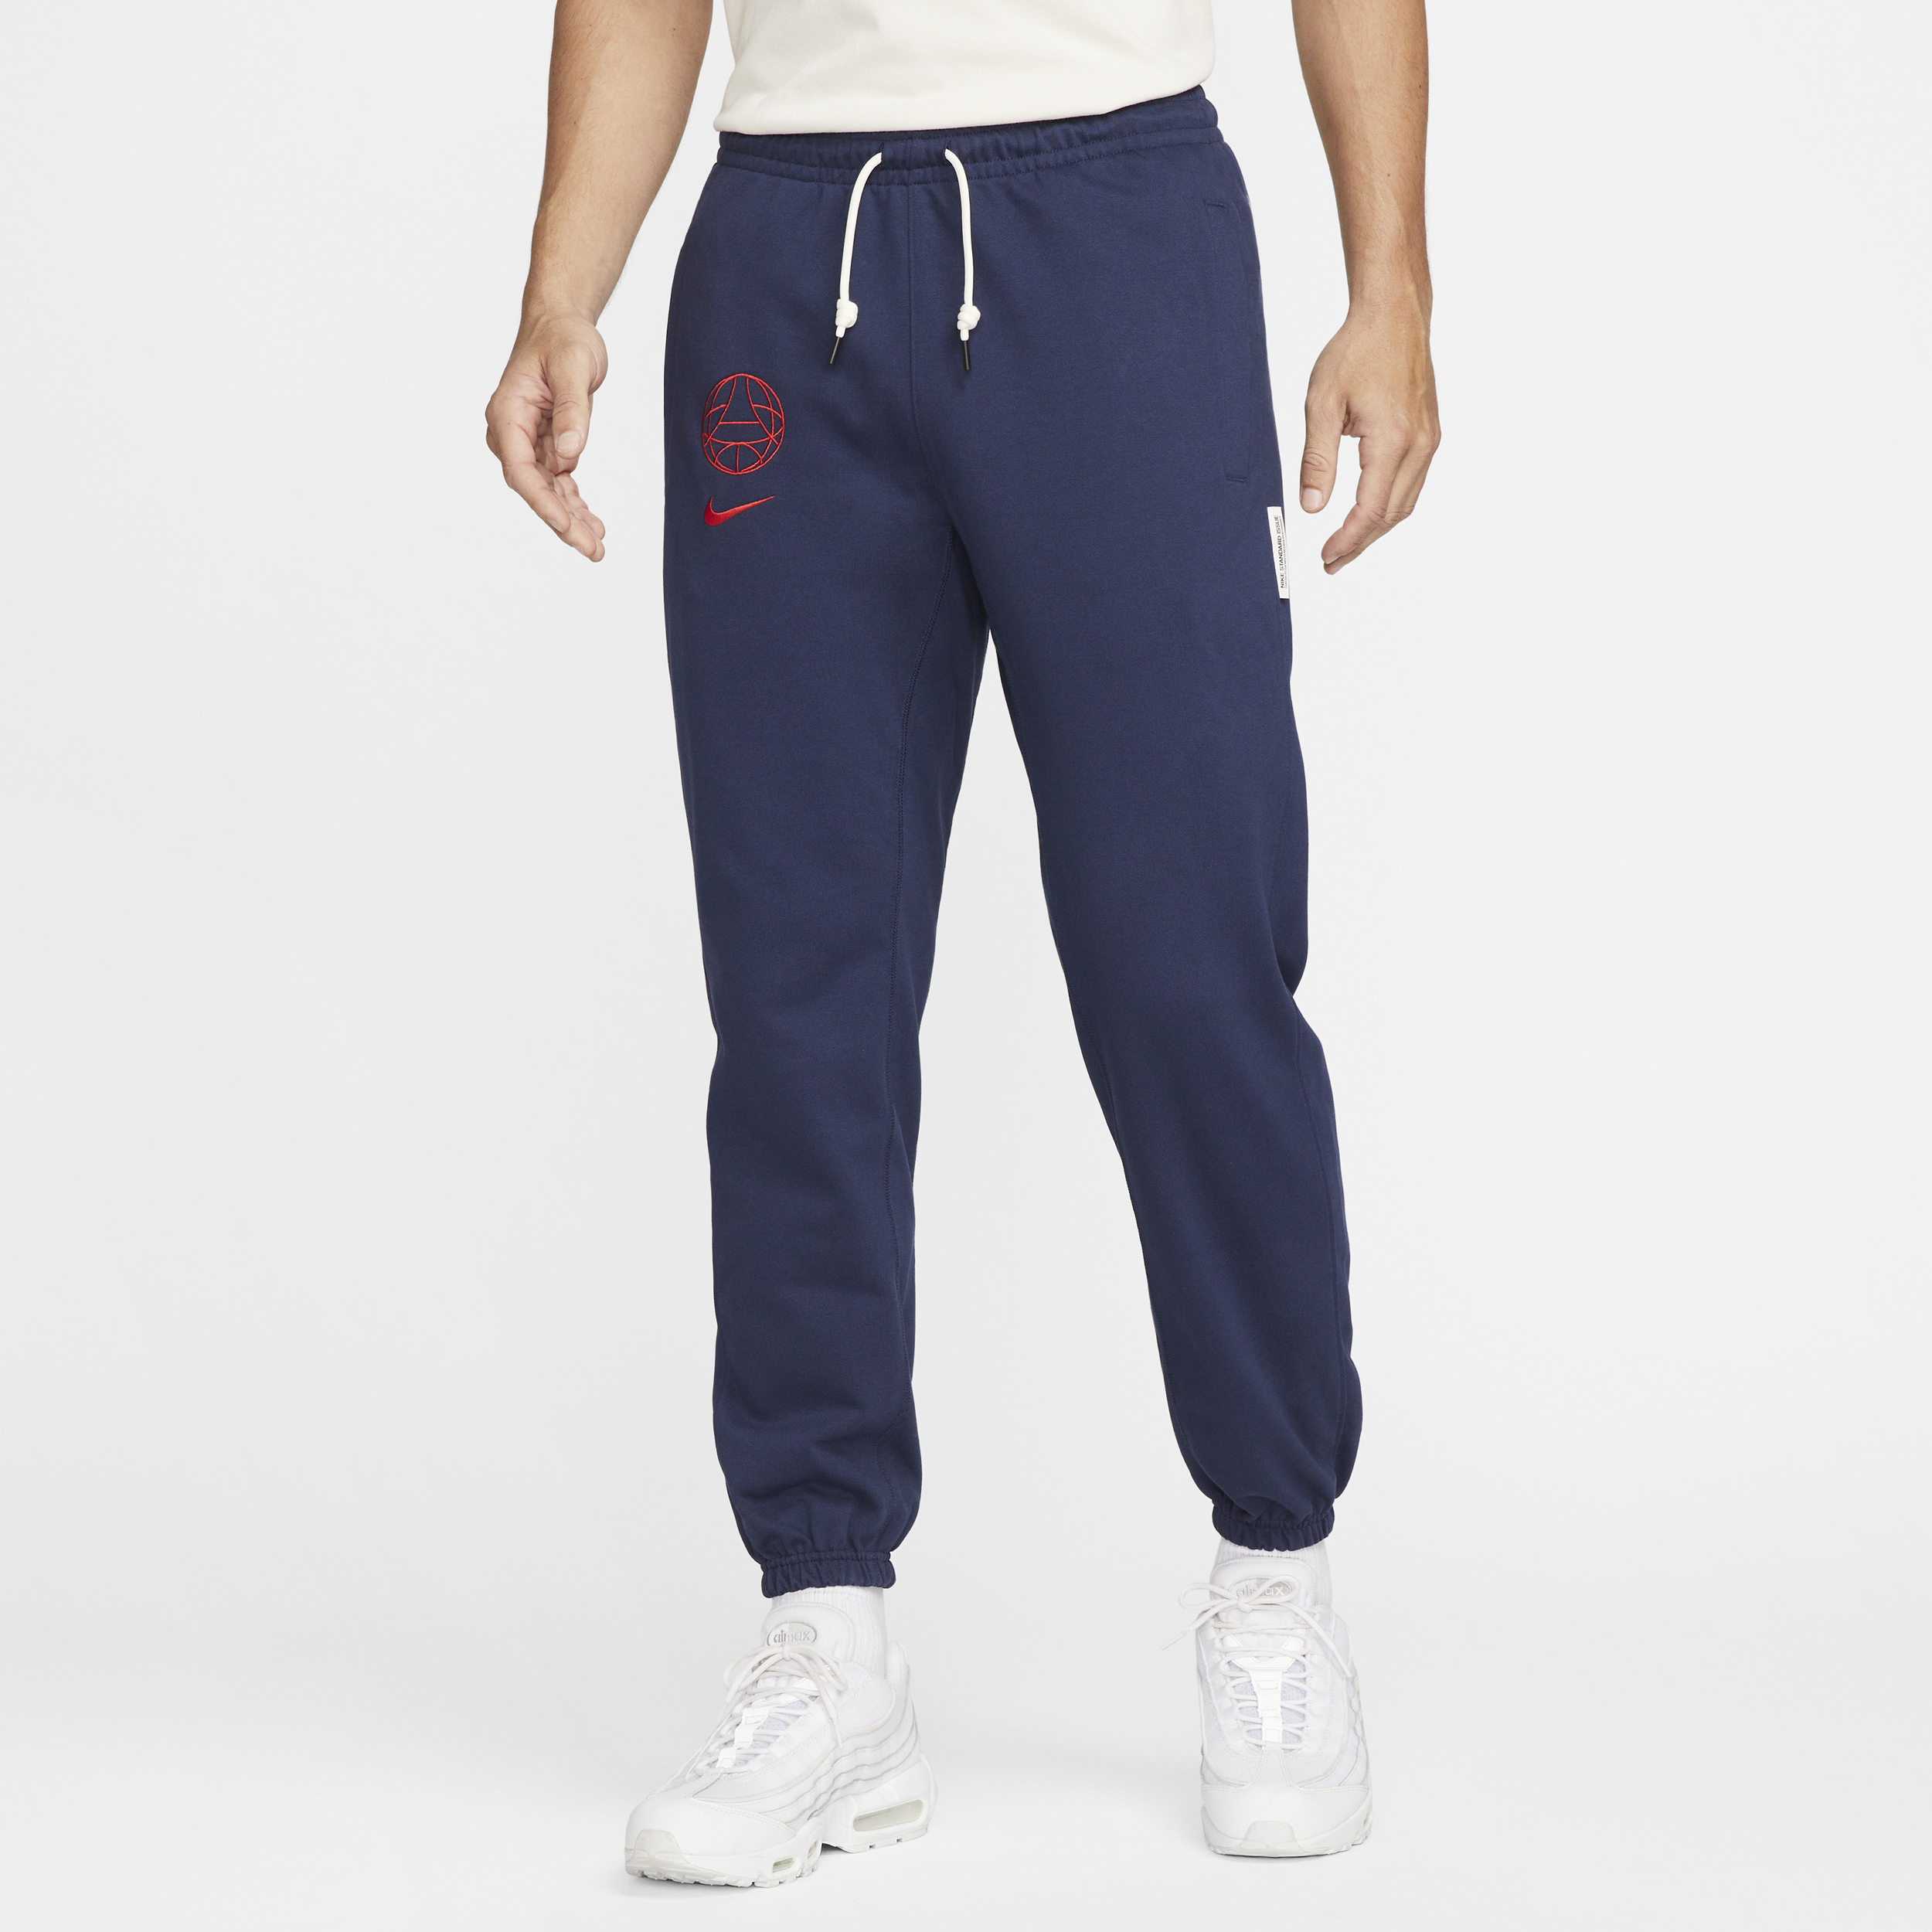 Paris Saint-Germain Standard Issue Nike Football-bukser til mænd - blå